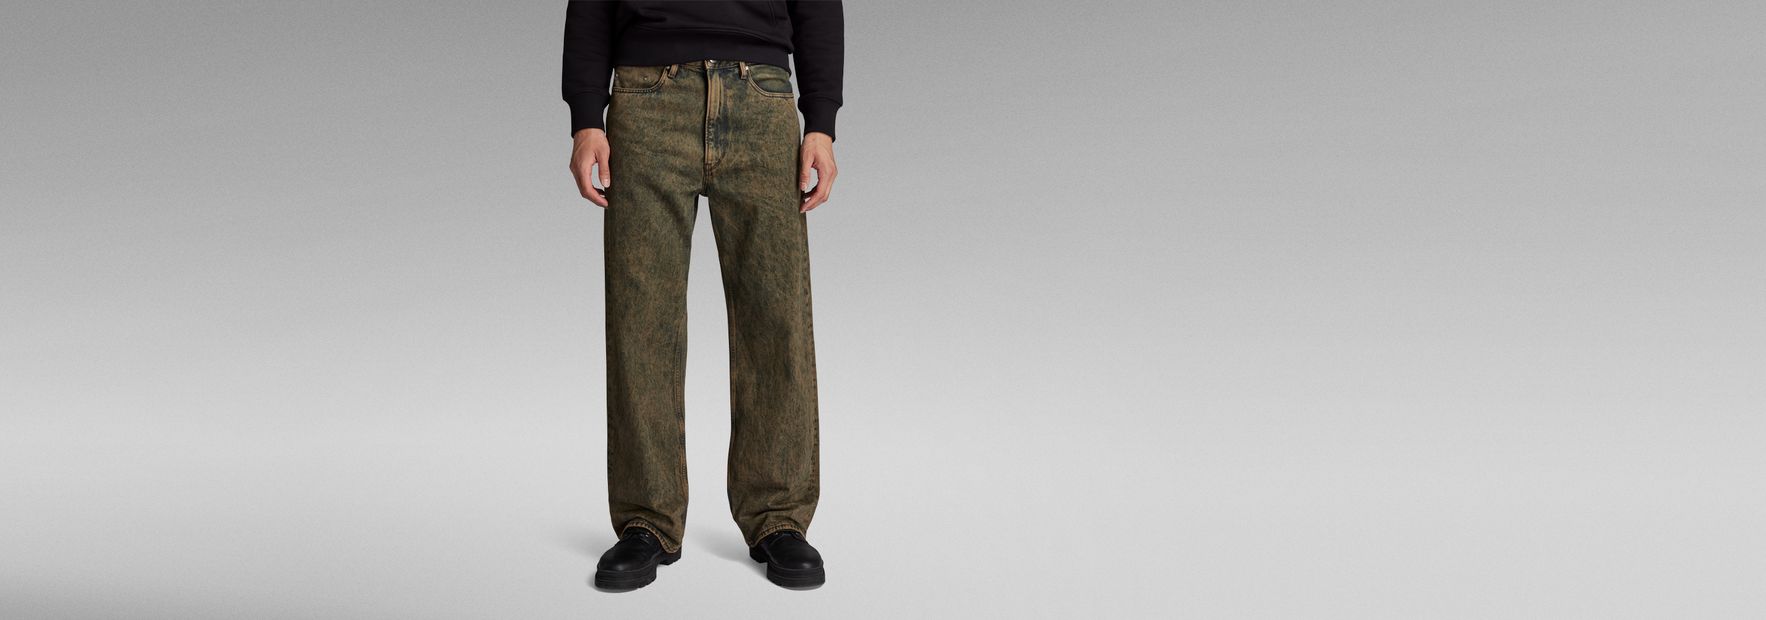 Trousers G STAR RAW Burgundy size 32 UK - US in Denim - Jeans - 37971883